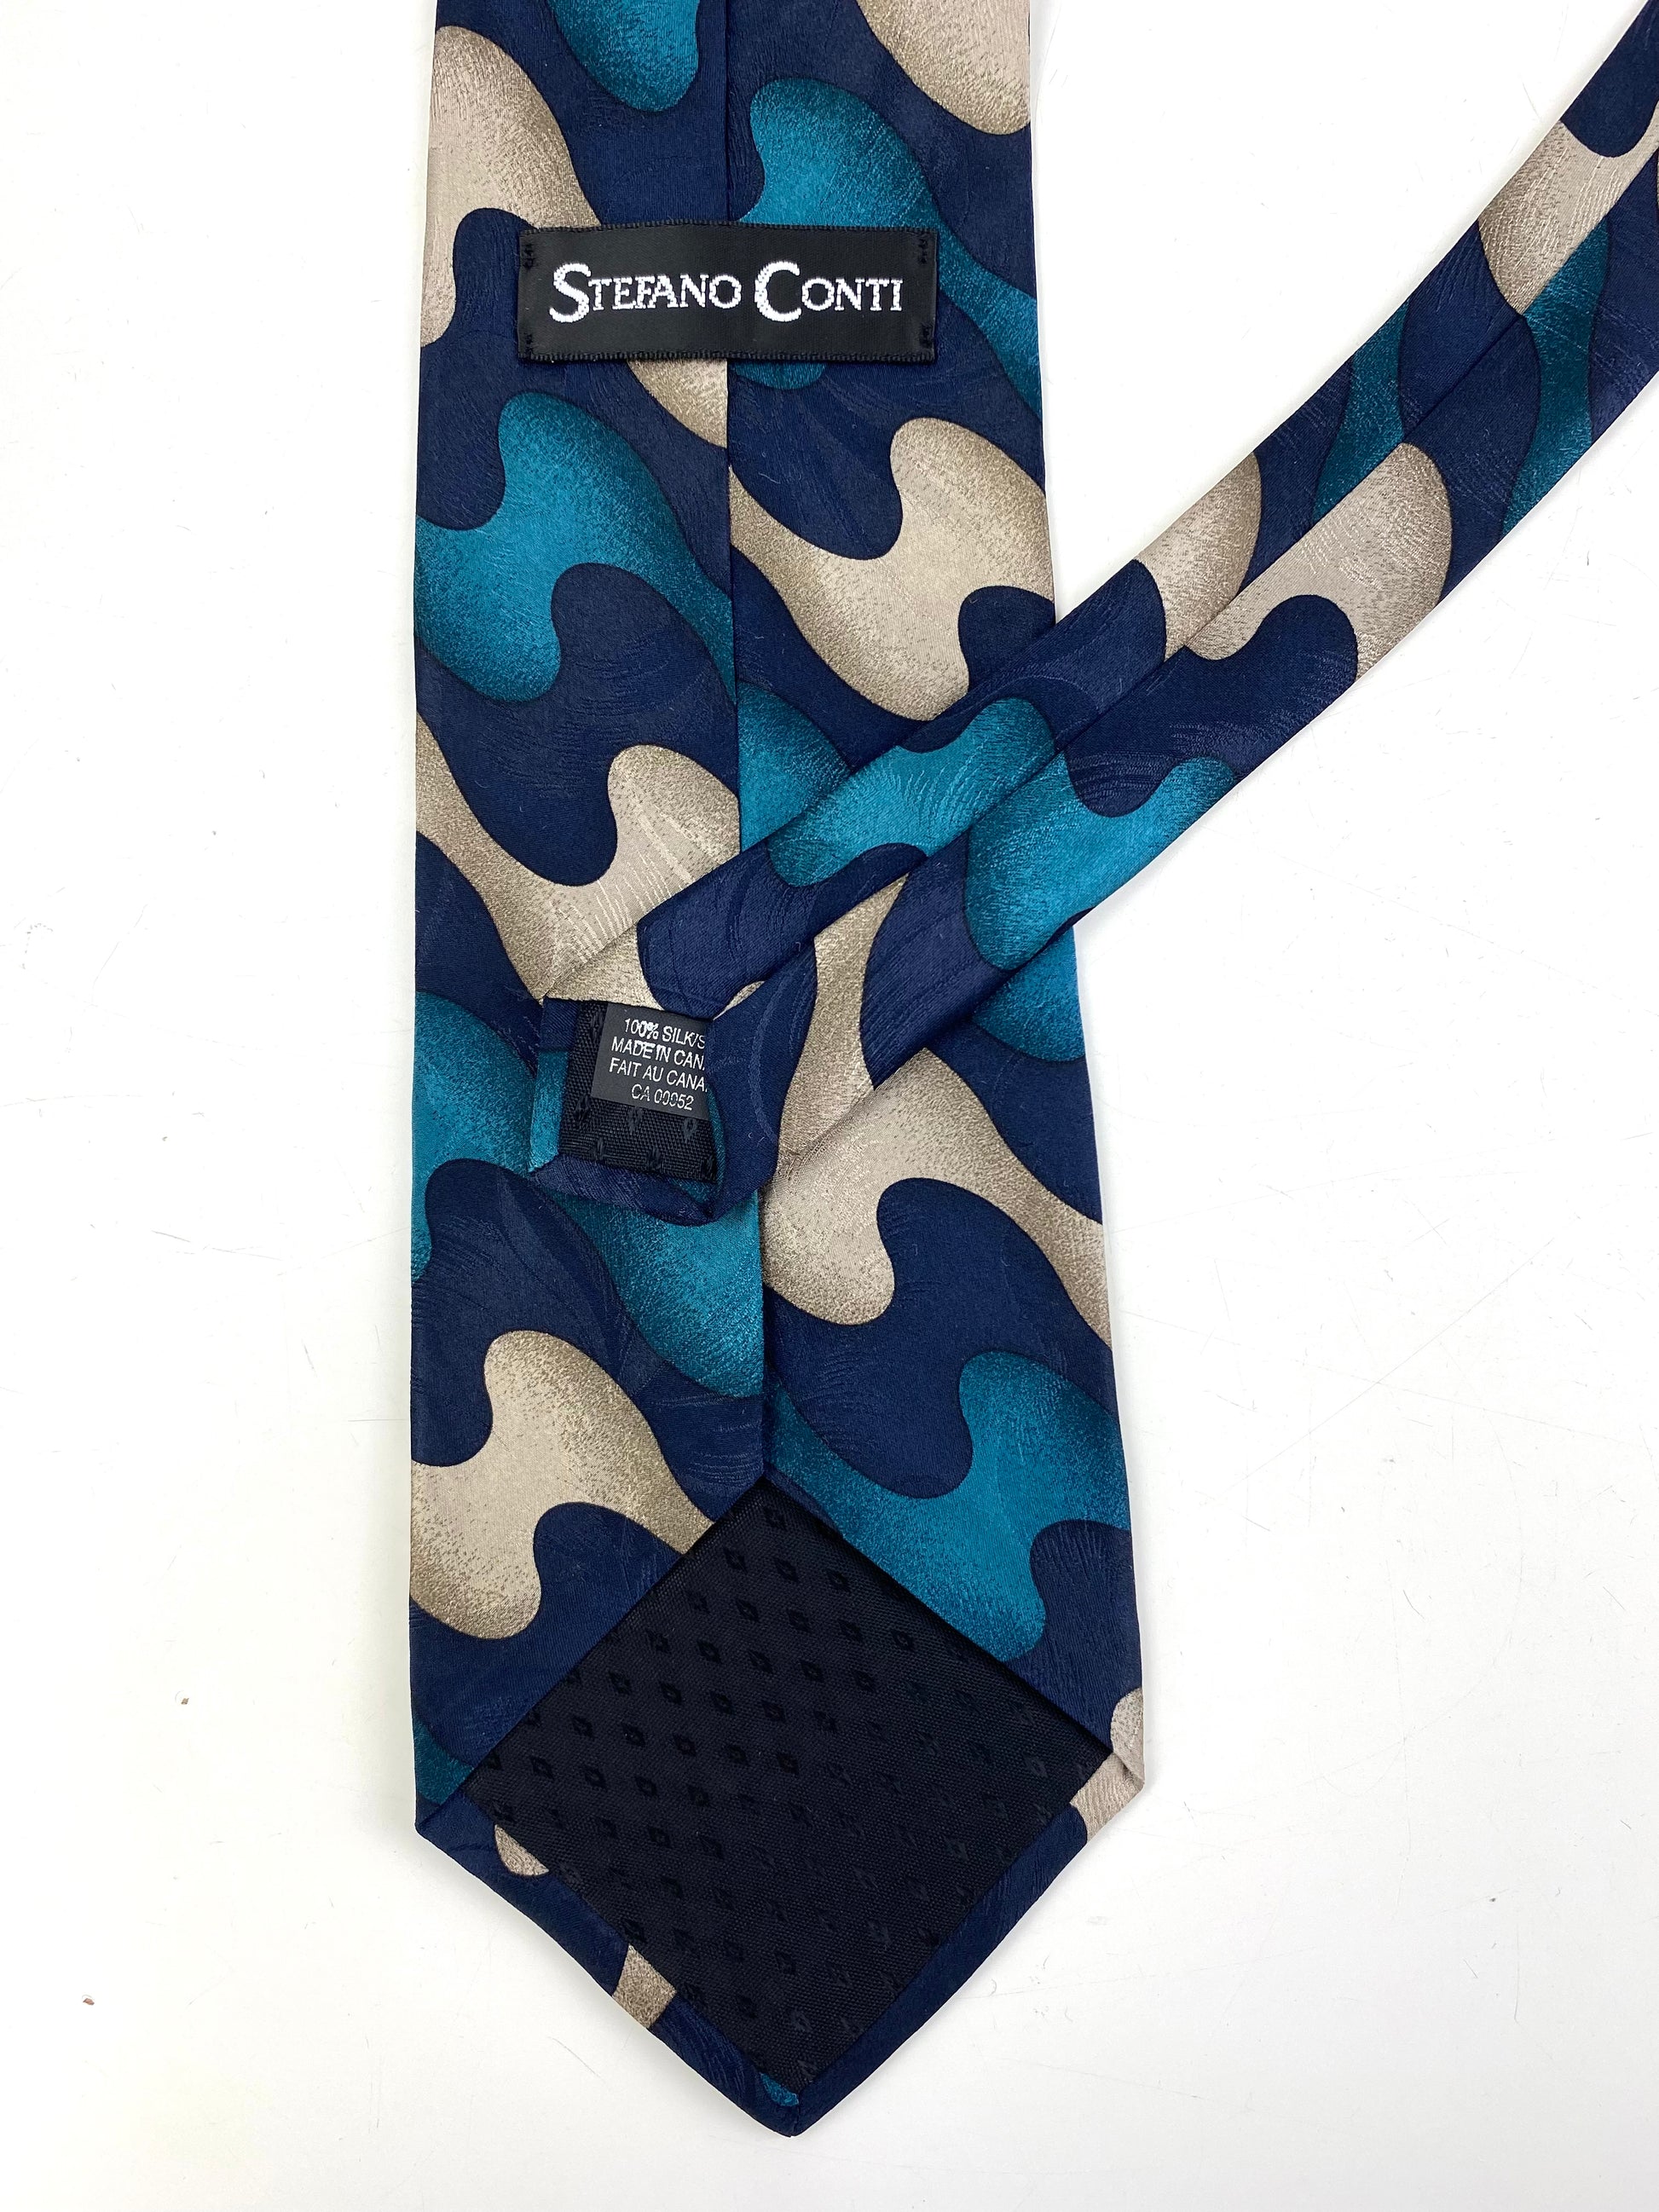 Back and labels of: 90s Deadstock Silk Necktie, Men's Vintage Teal/ Navy/ Beige Abstract Pattern Tie, NOS